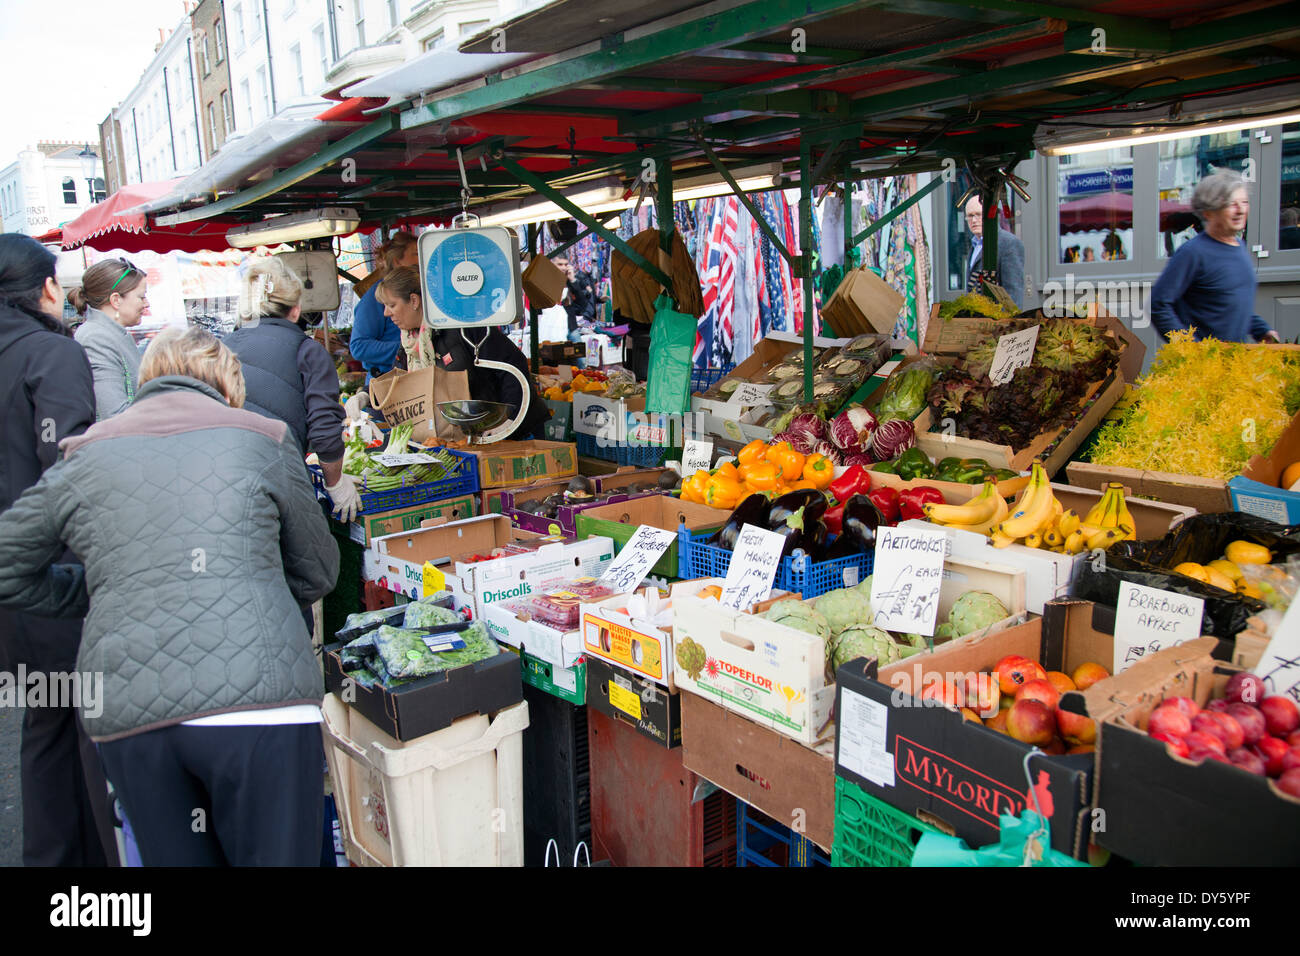 Portobello Market Greengrocer Traders - London W11 - UK Stock Photo - Alamy